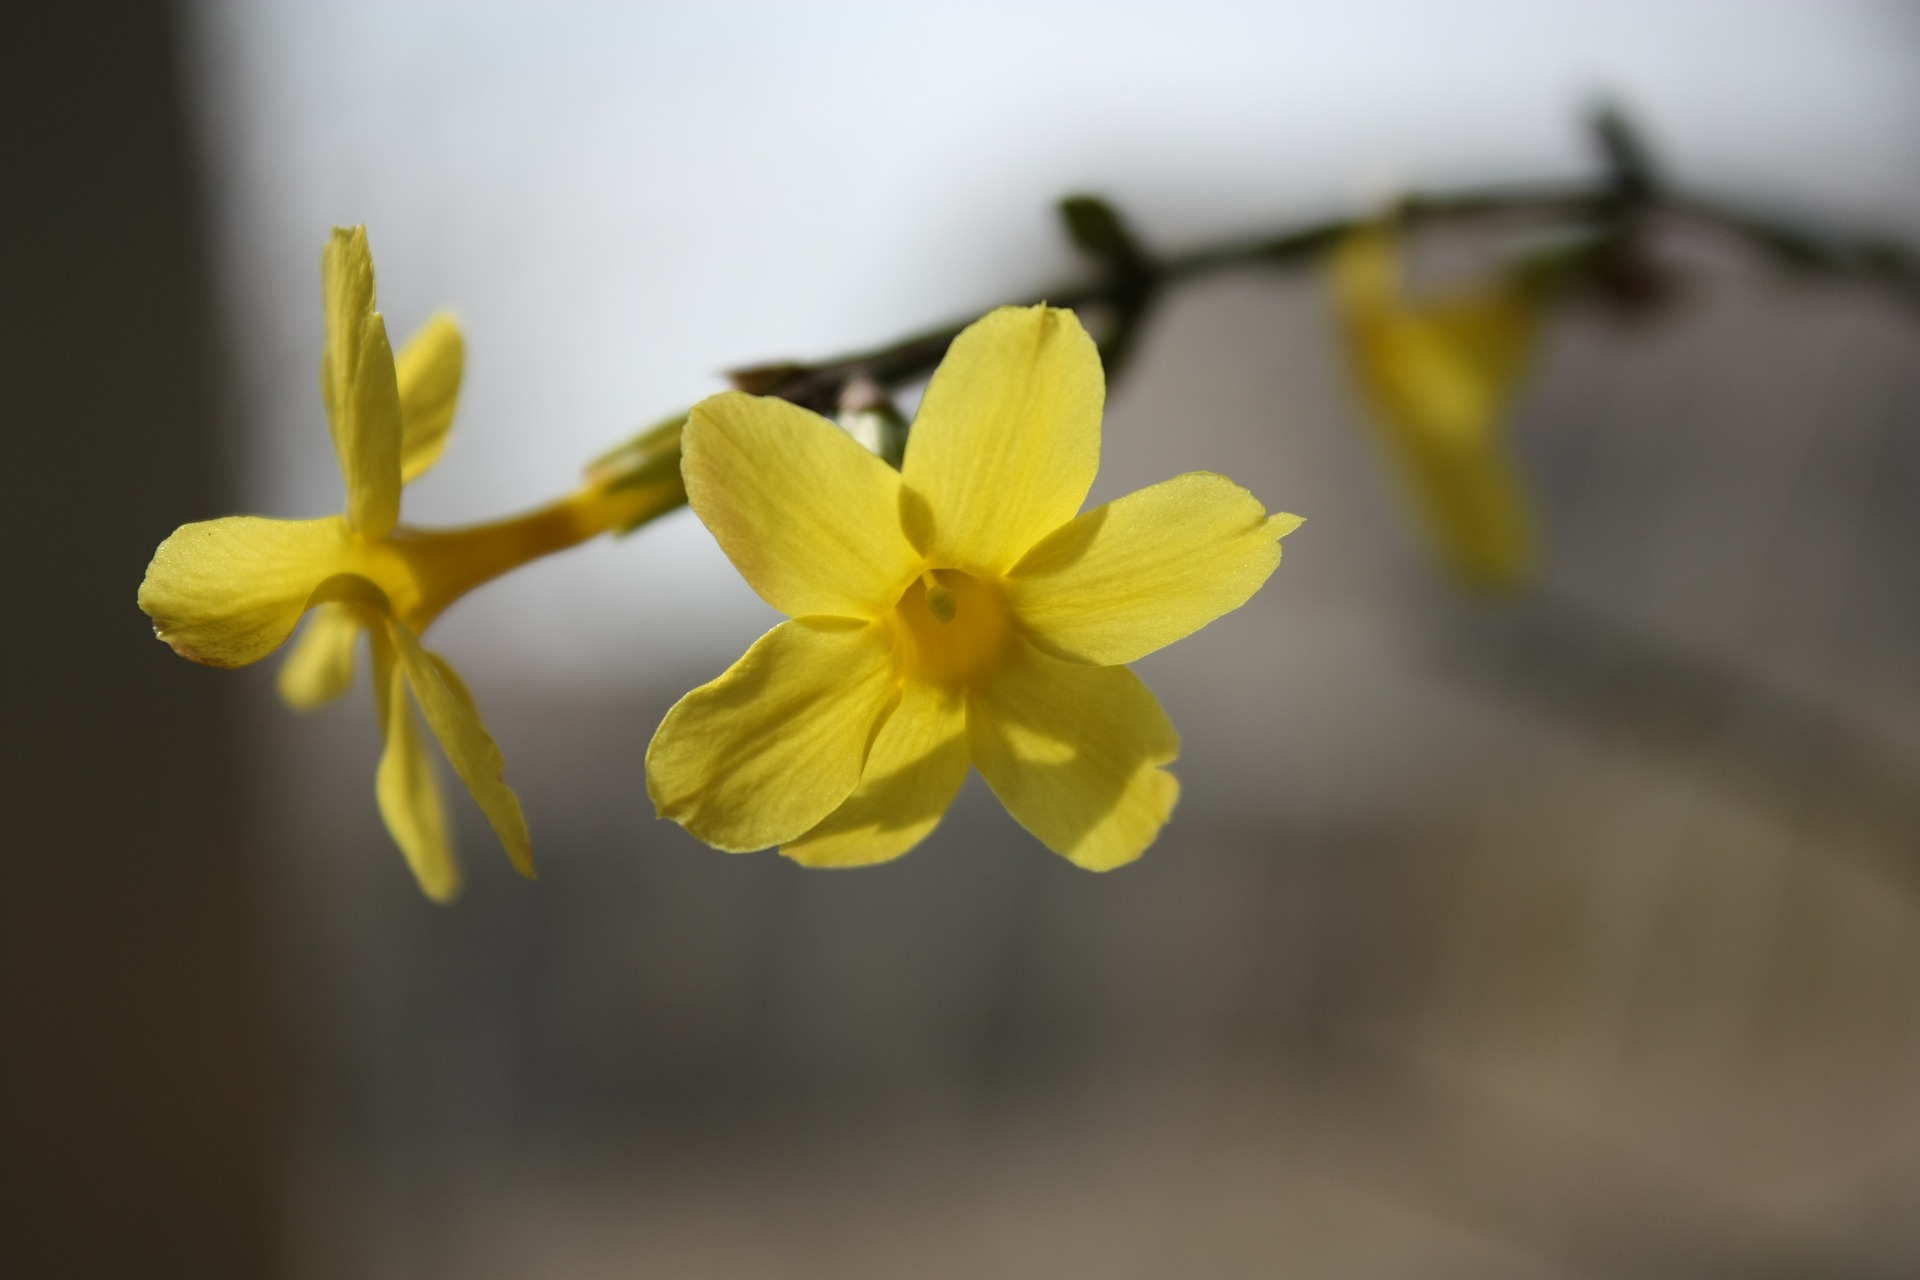 7 plante si flori care rezista iarna afara in ghiveci si cum sa le ingrijesti corect